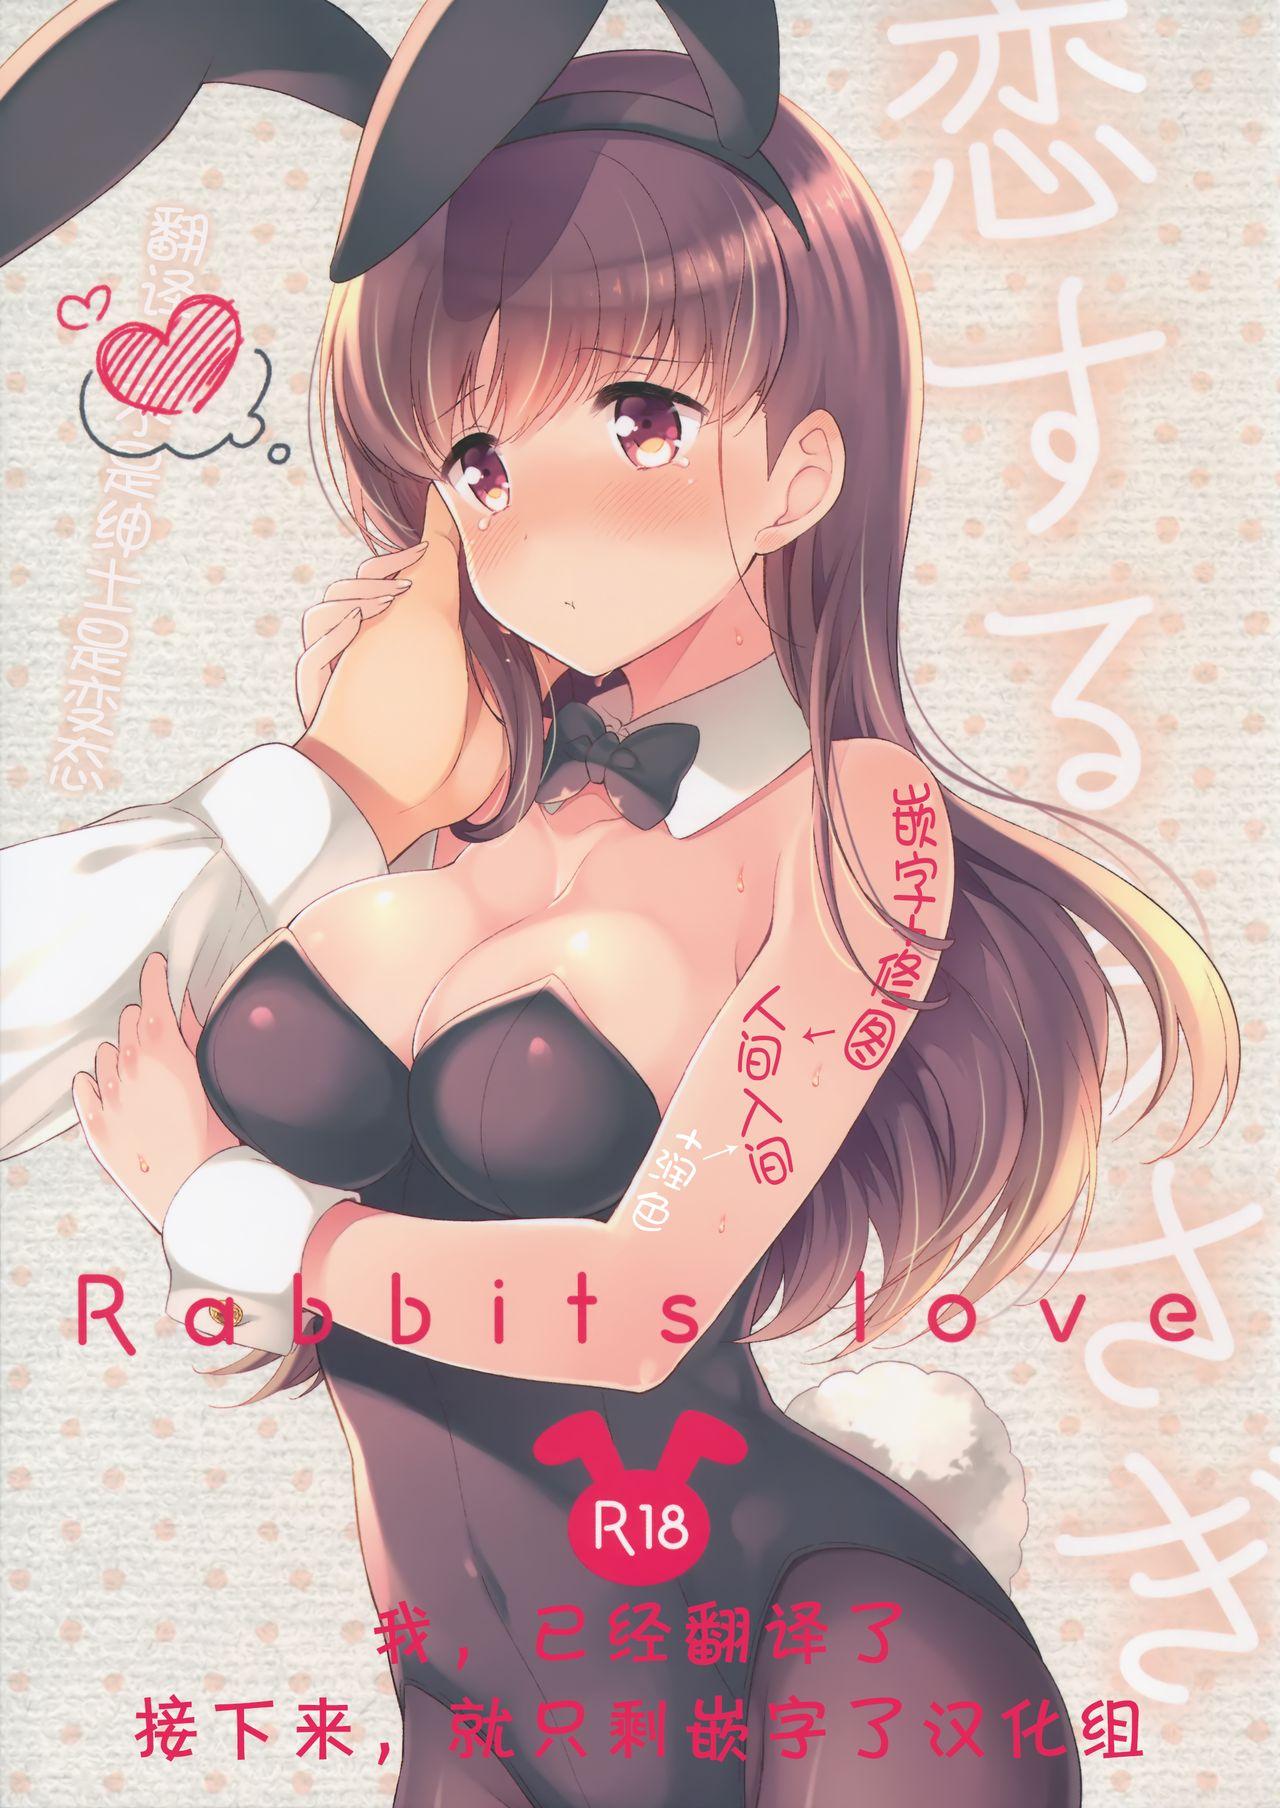 Koisuru Usagi - Rabbits love 0